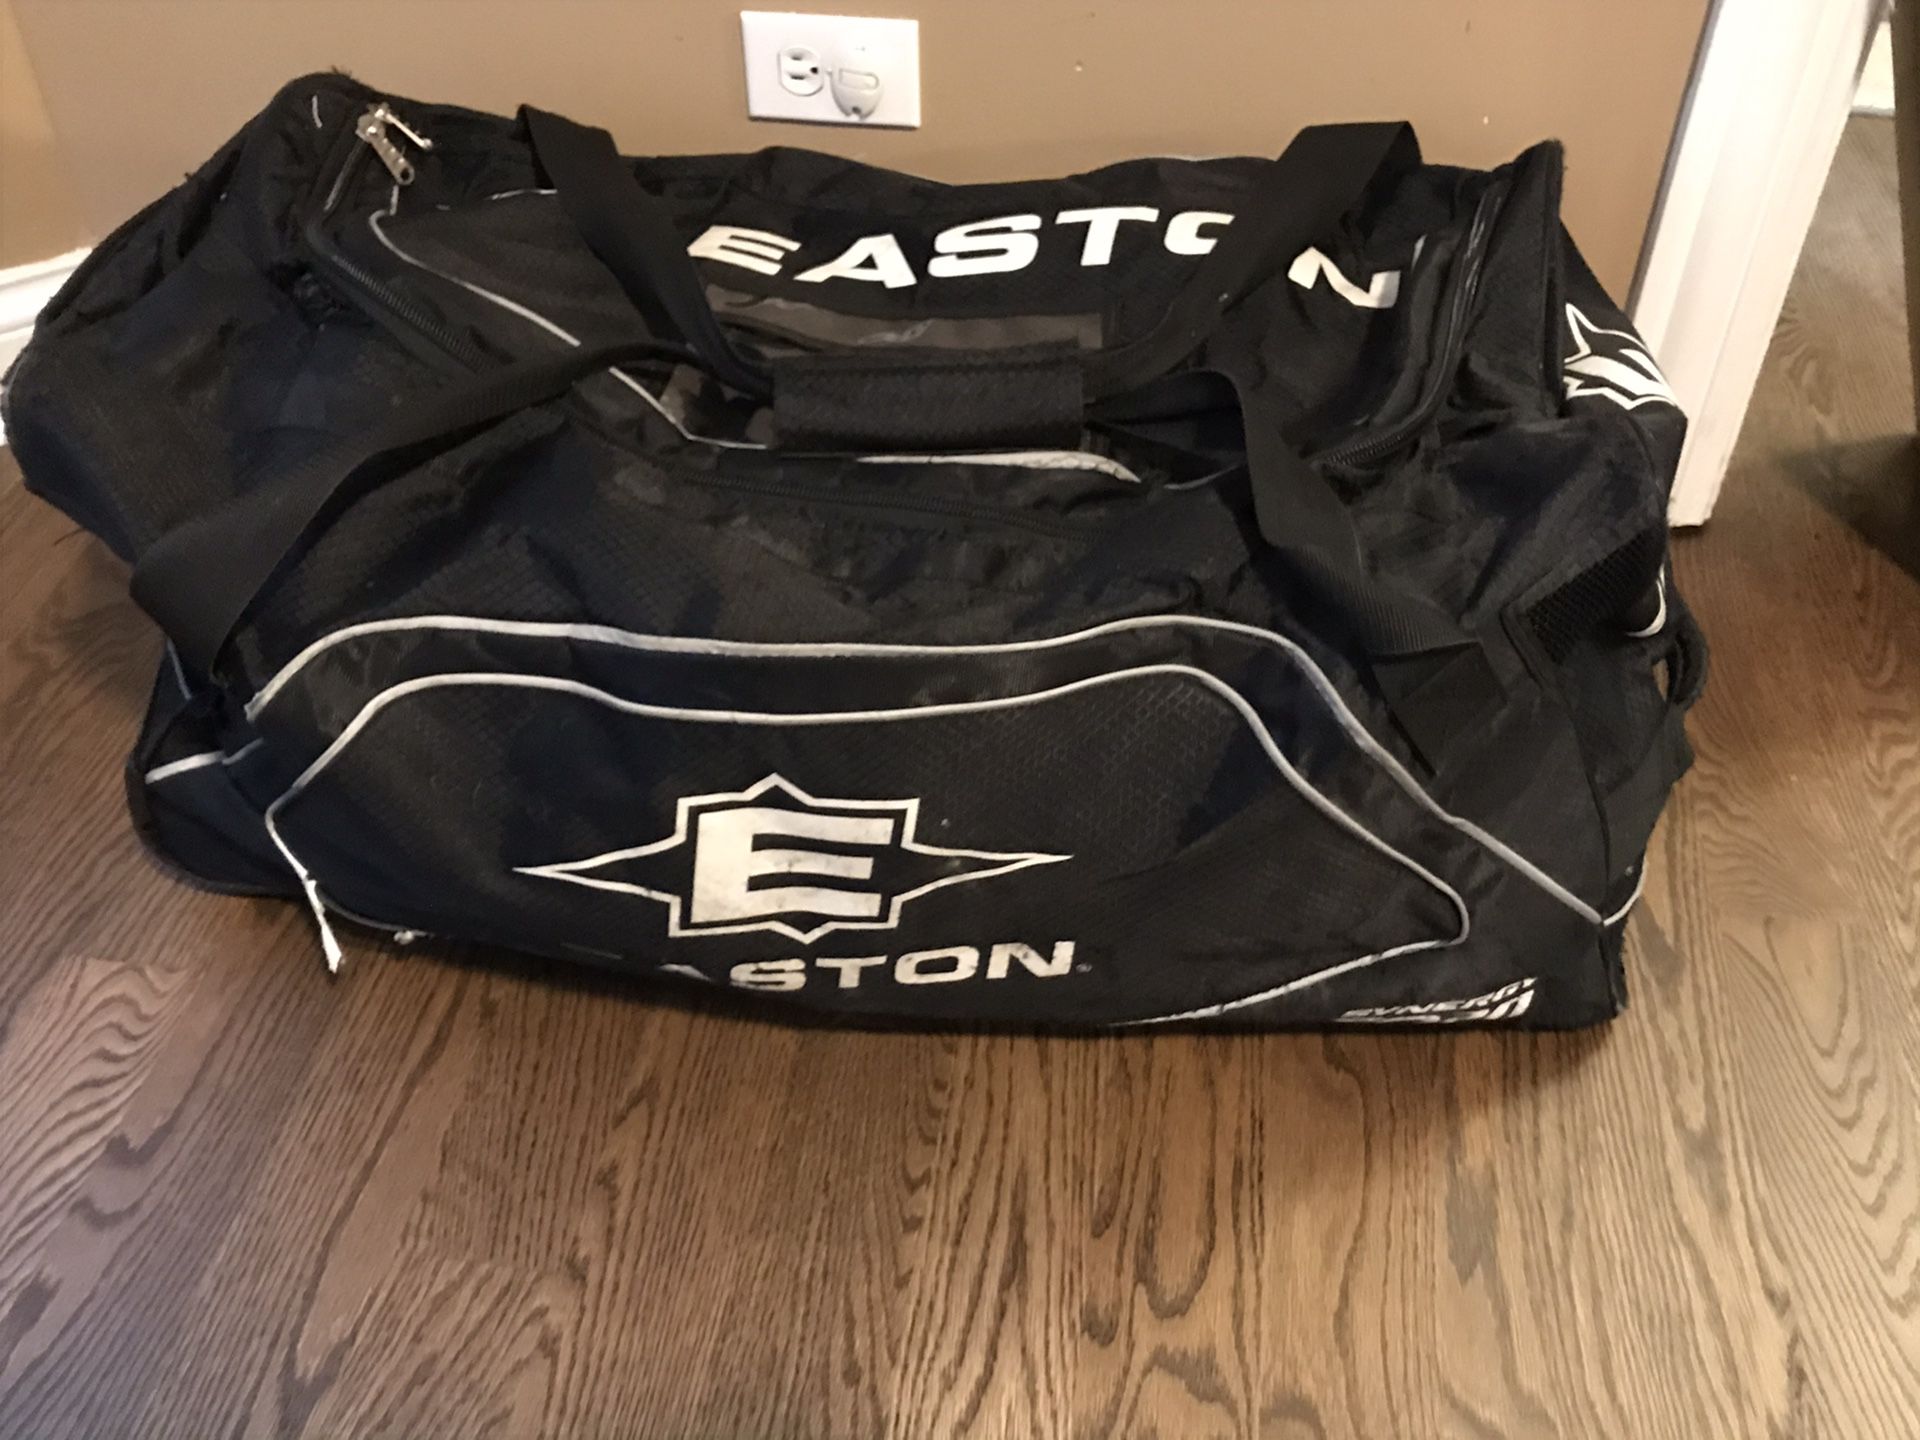 Easton rolling hockey bag